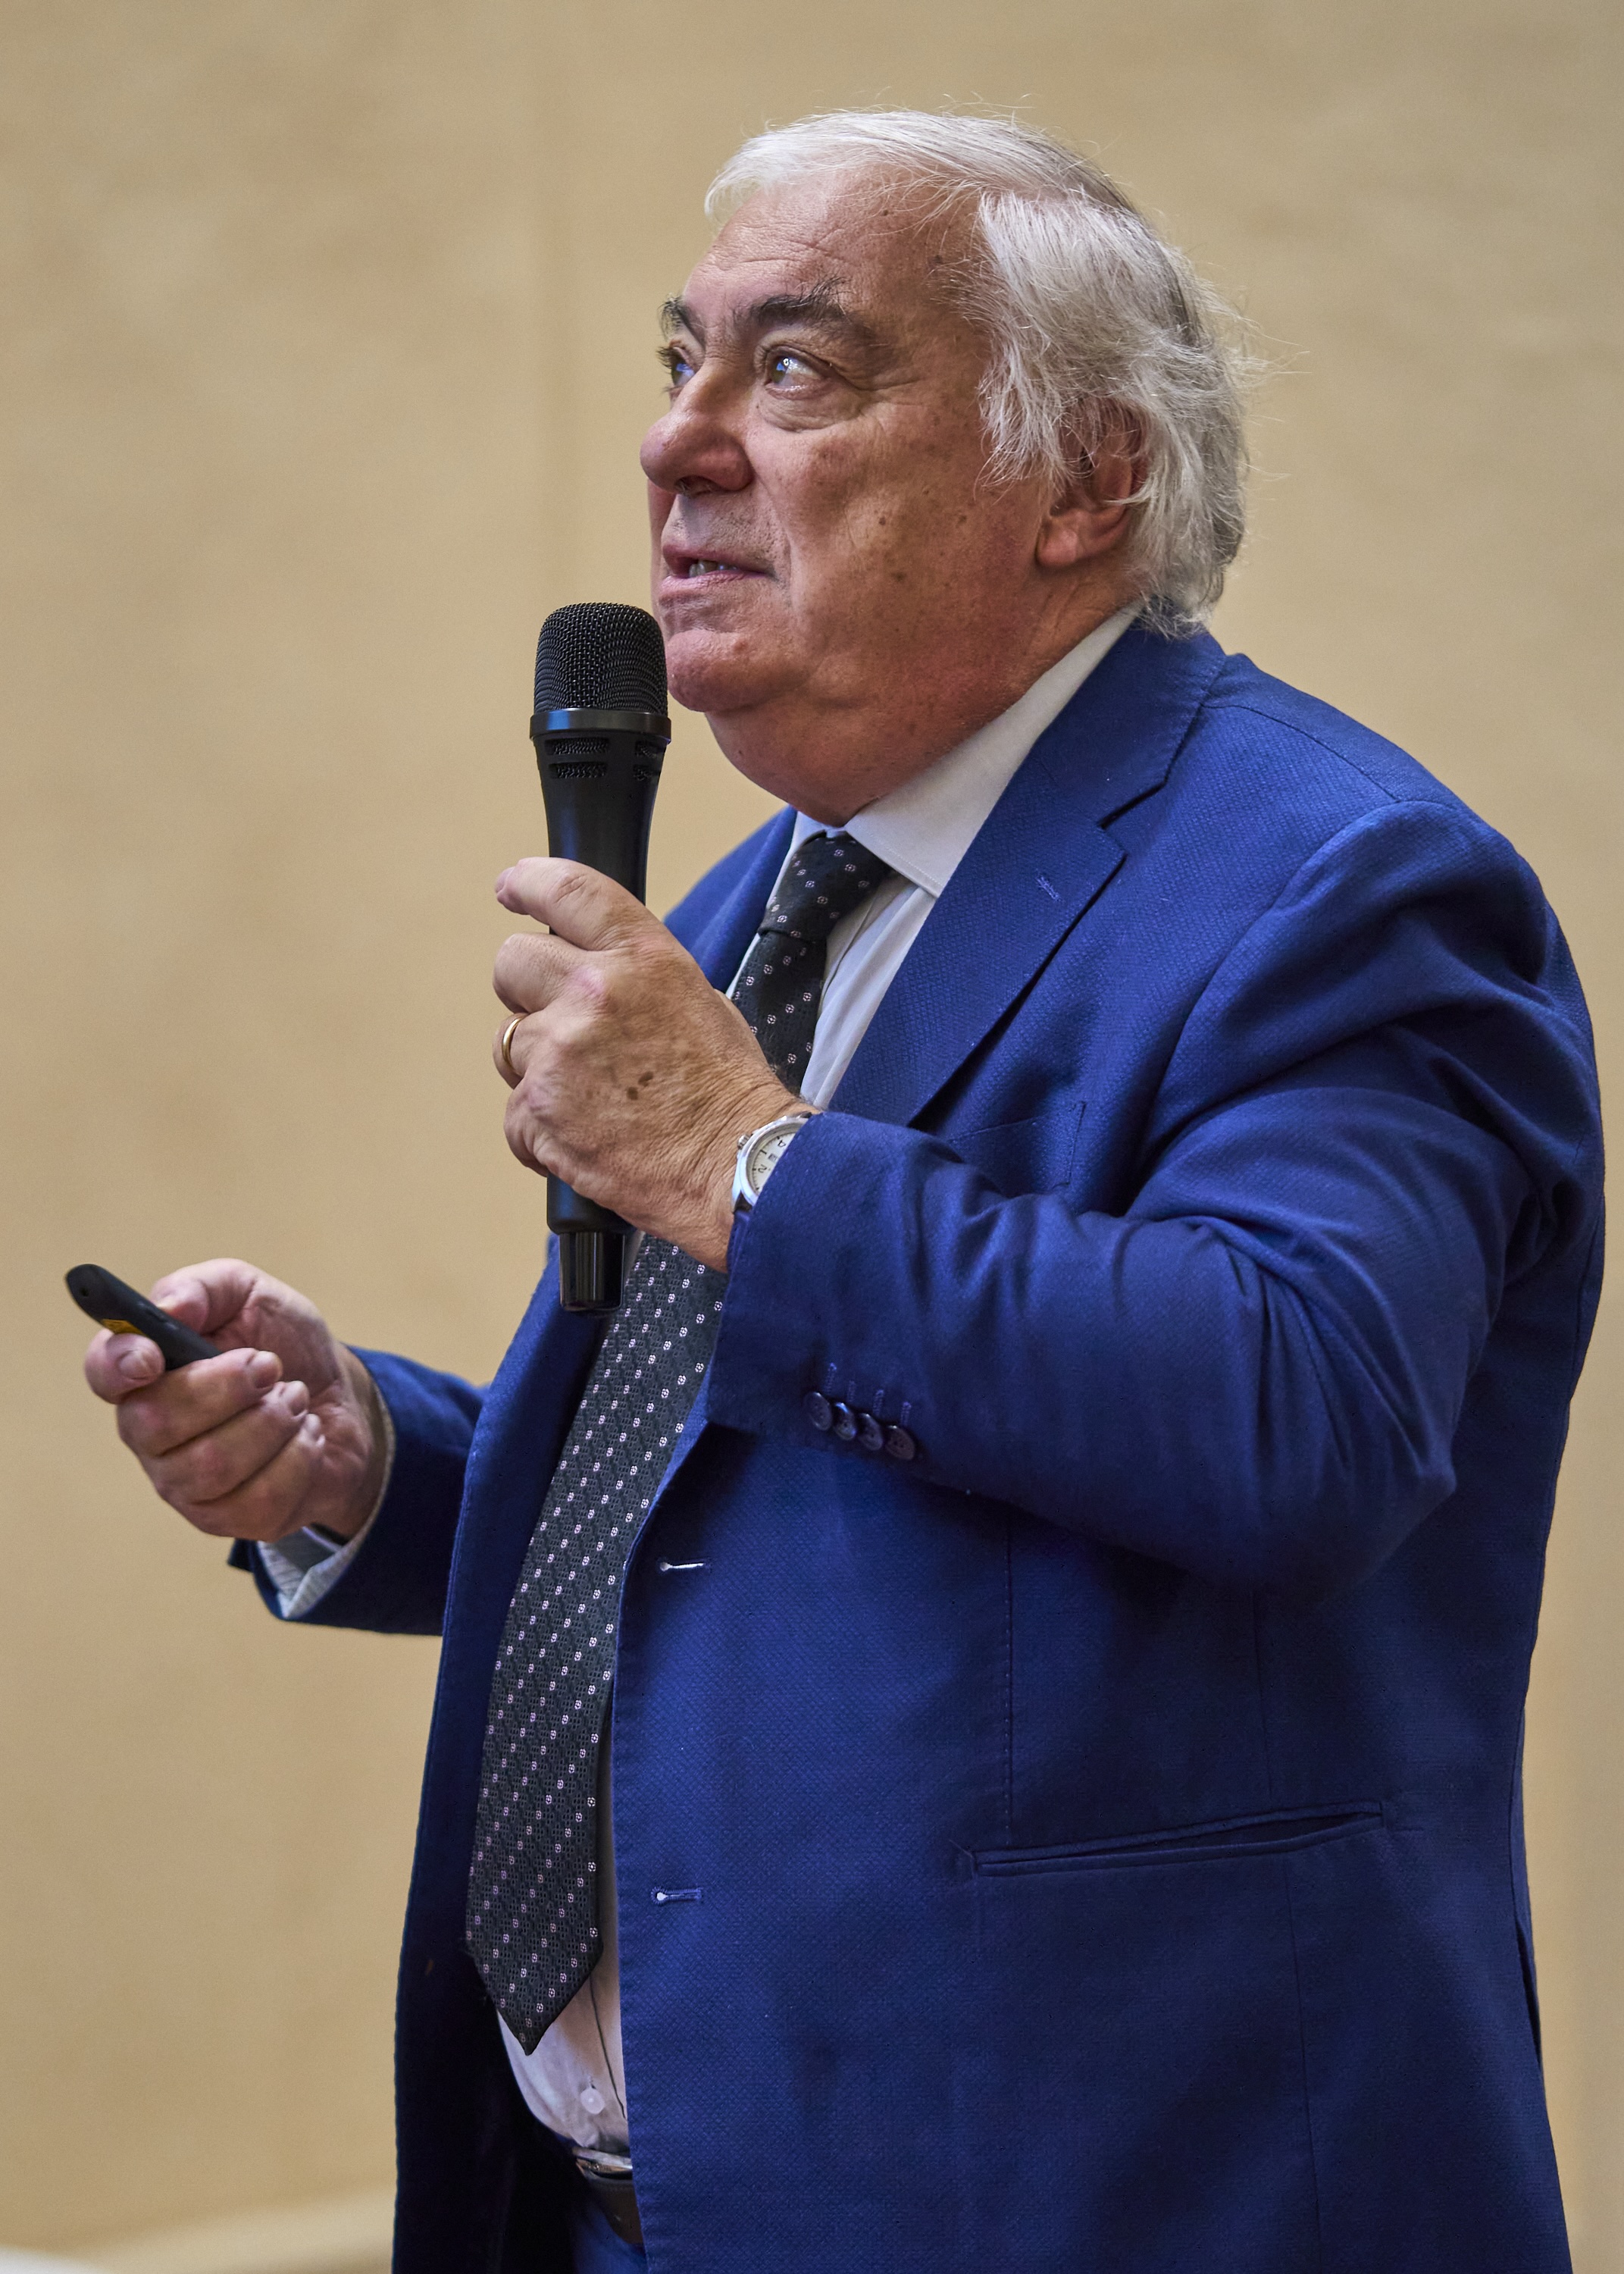 Carlo Cacciamani discussing ItaliaMeteo's mission and objectives